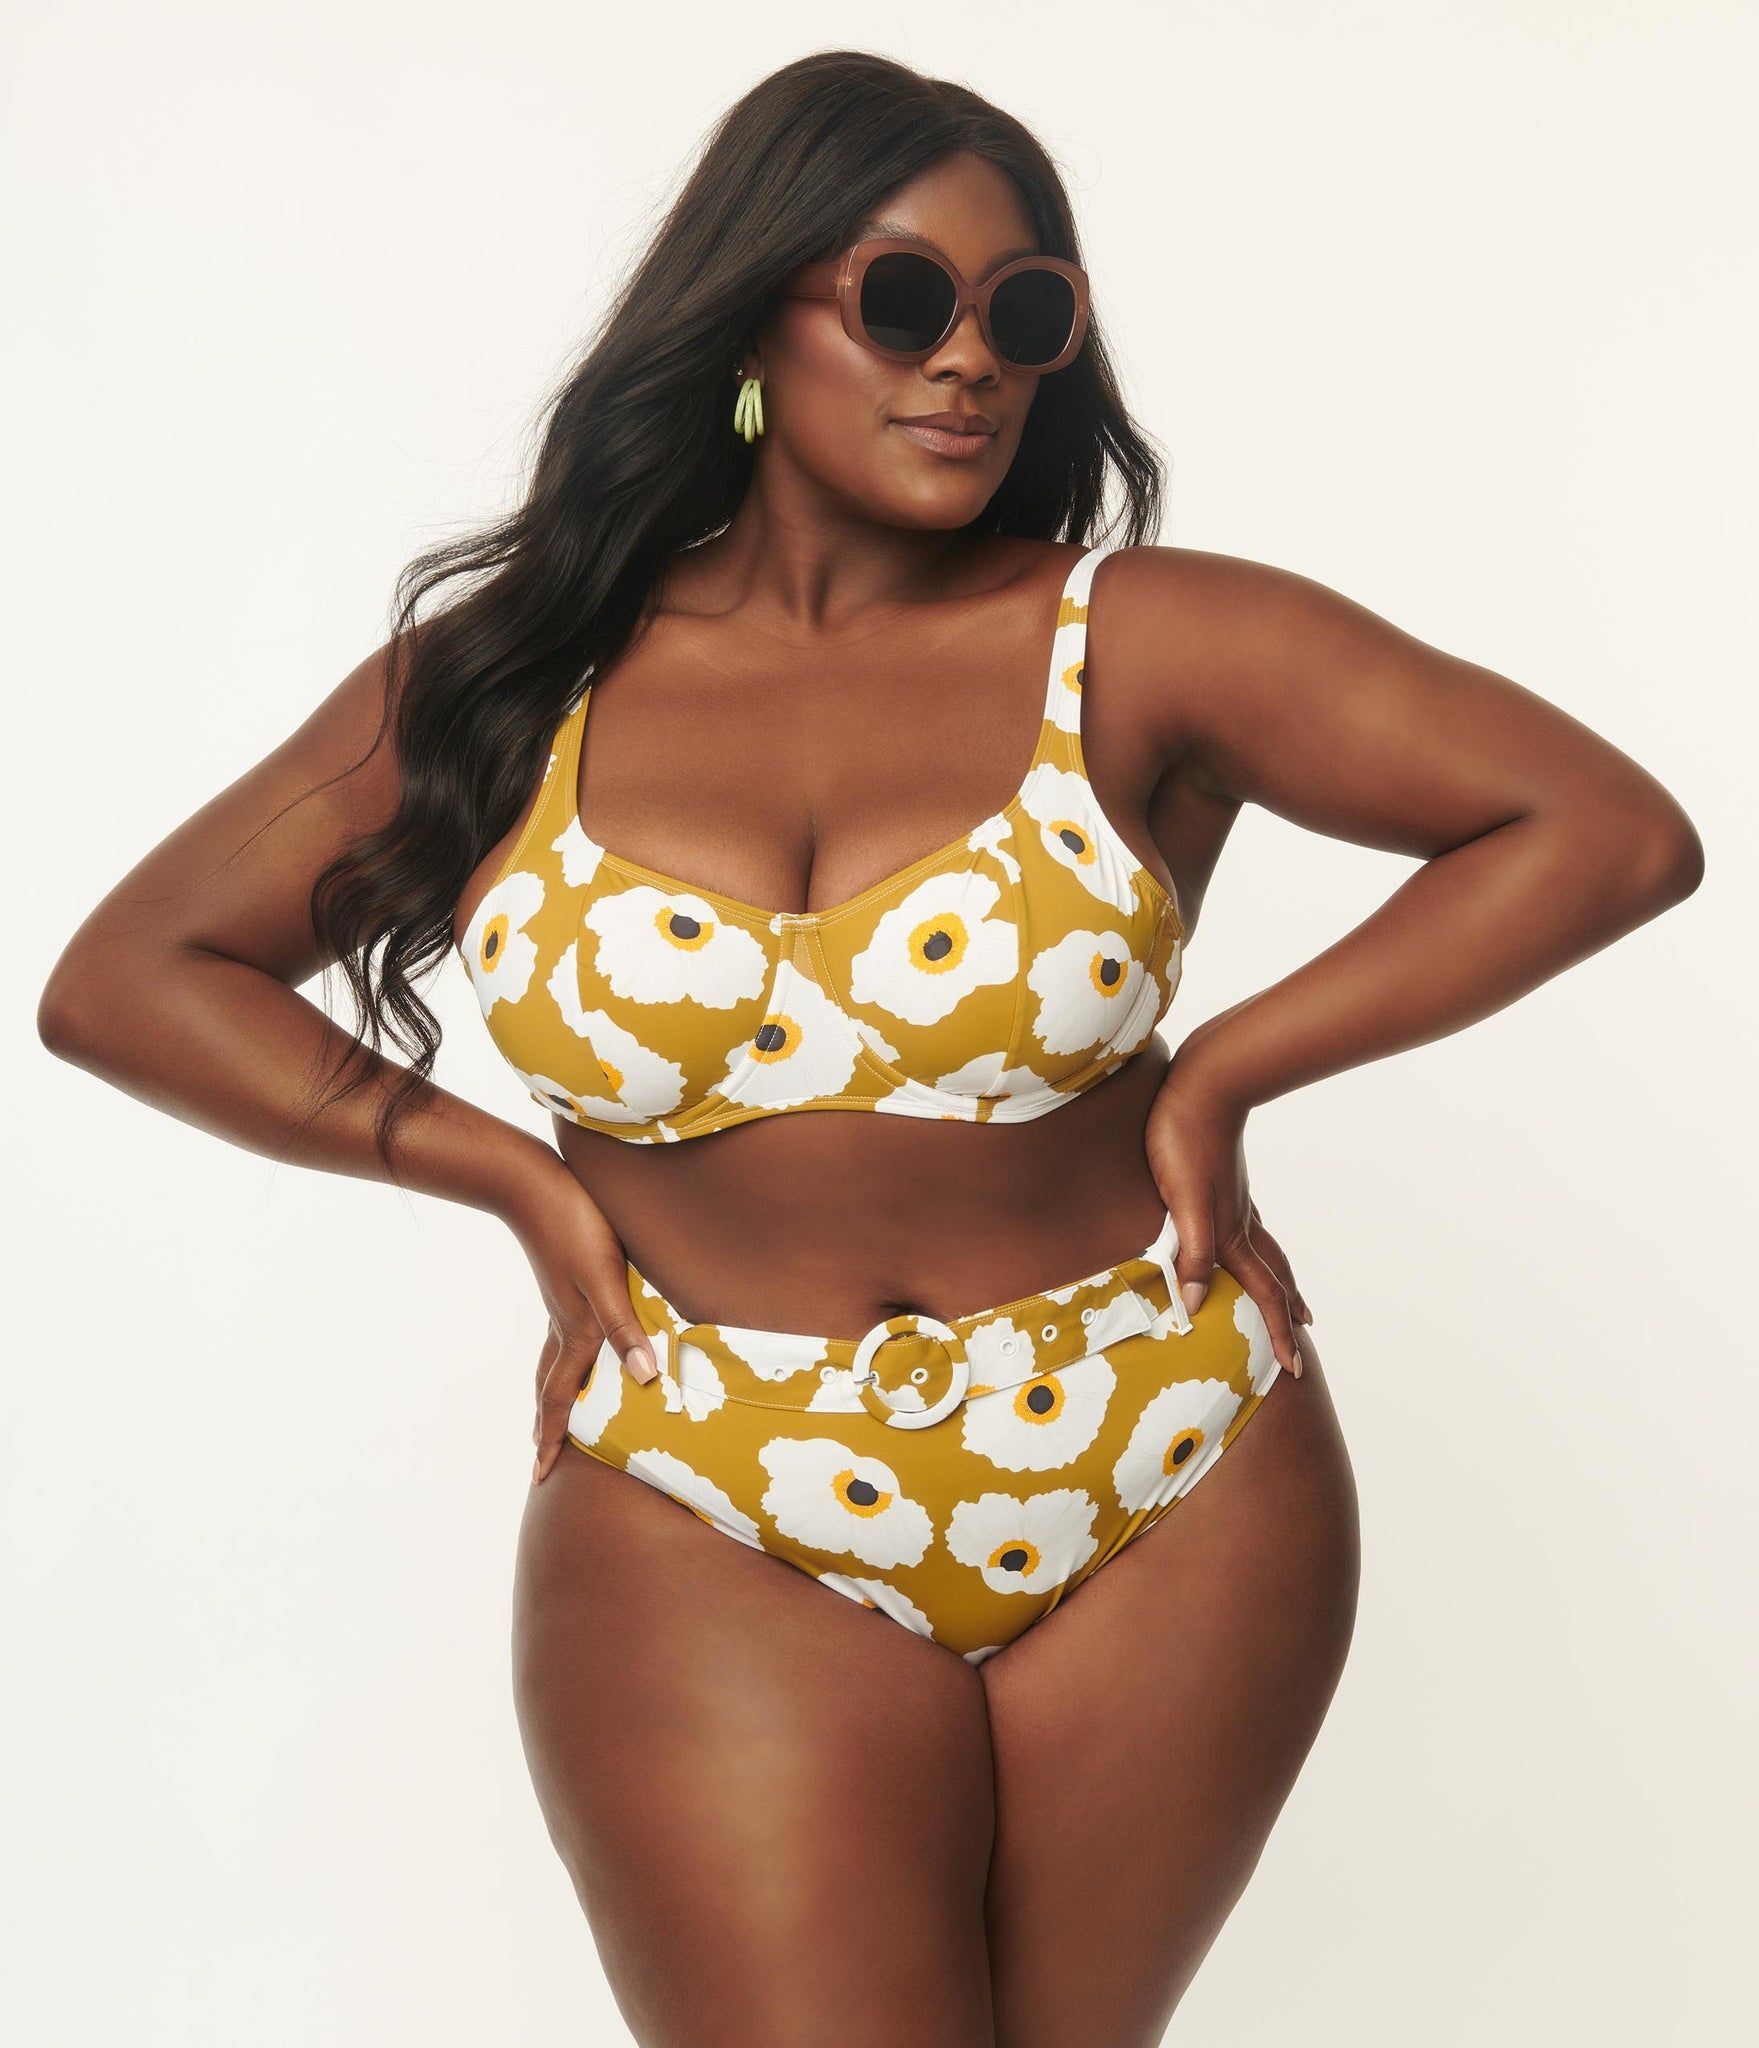 MITIY Womens Stylish Print Zipper Front Tankini Top with Skirted Bottom Swimsuit Set 